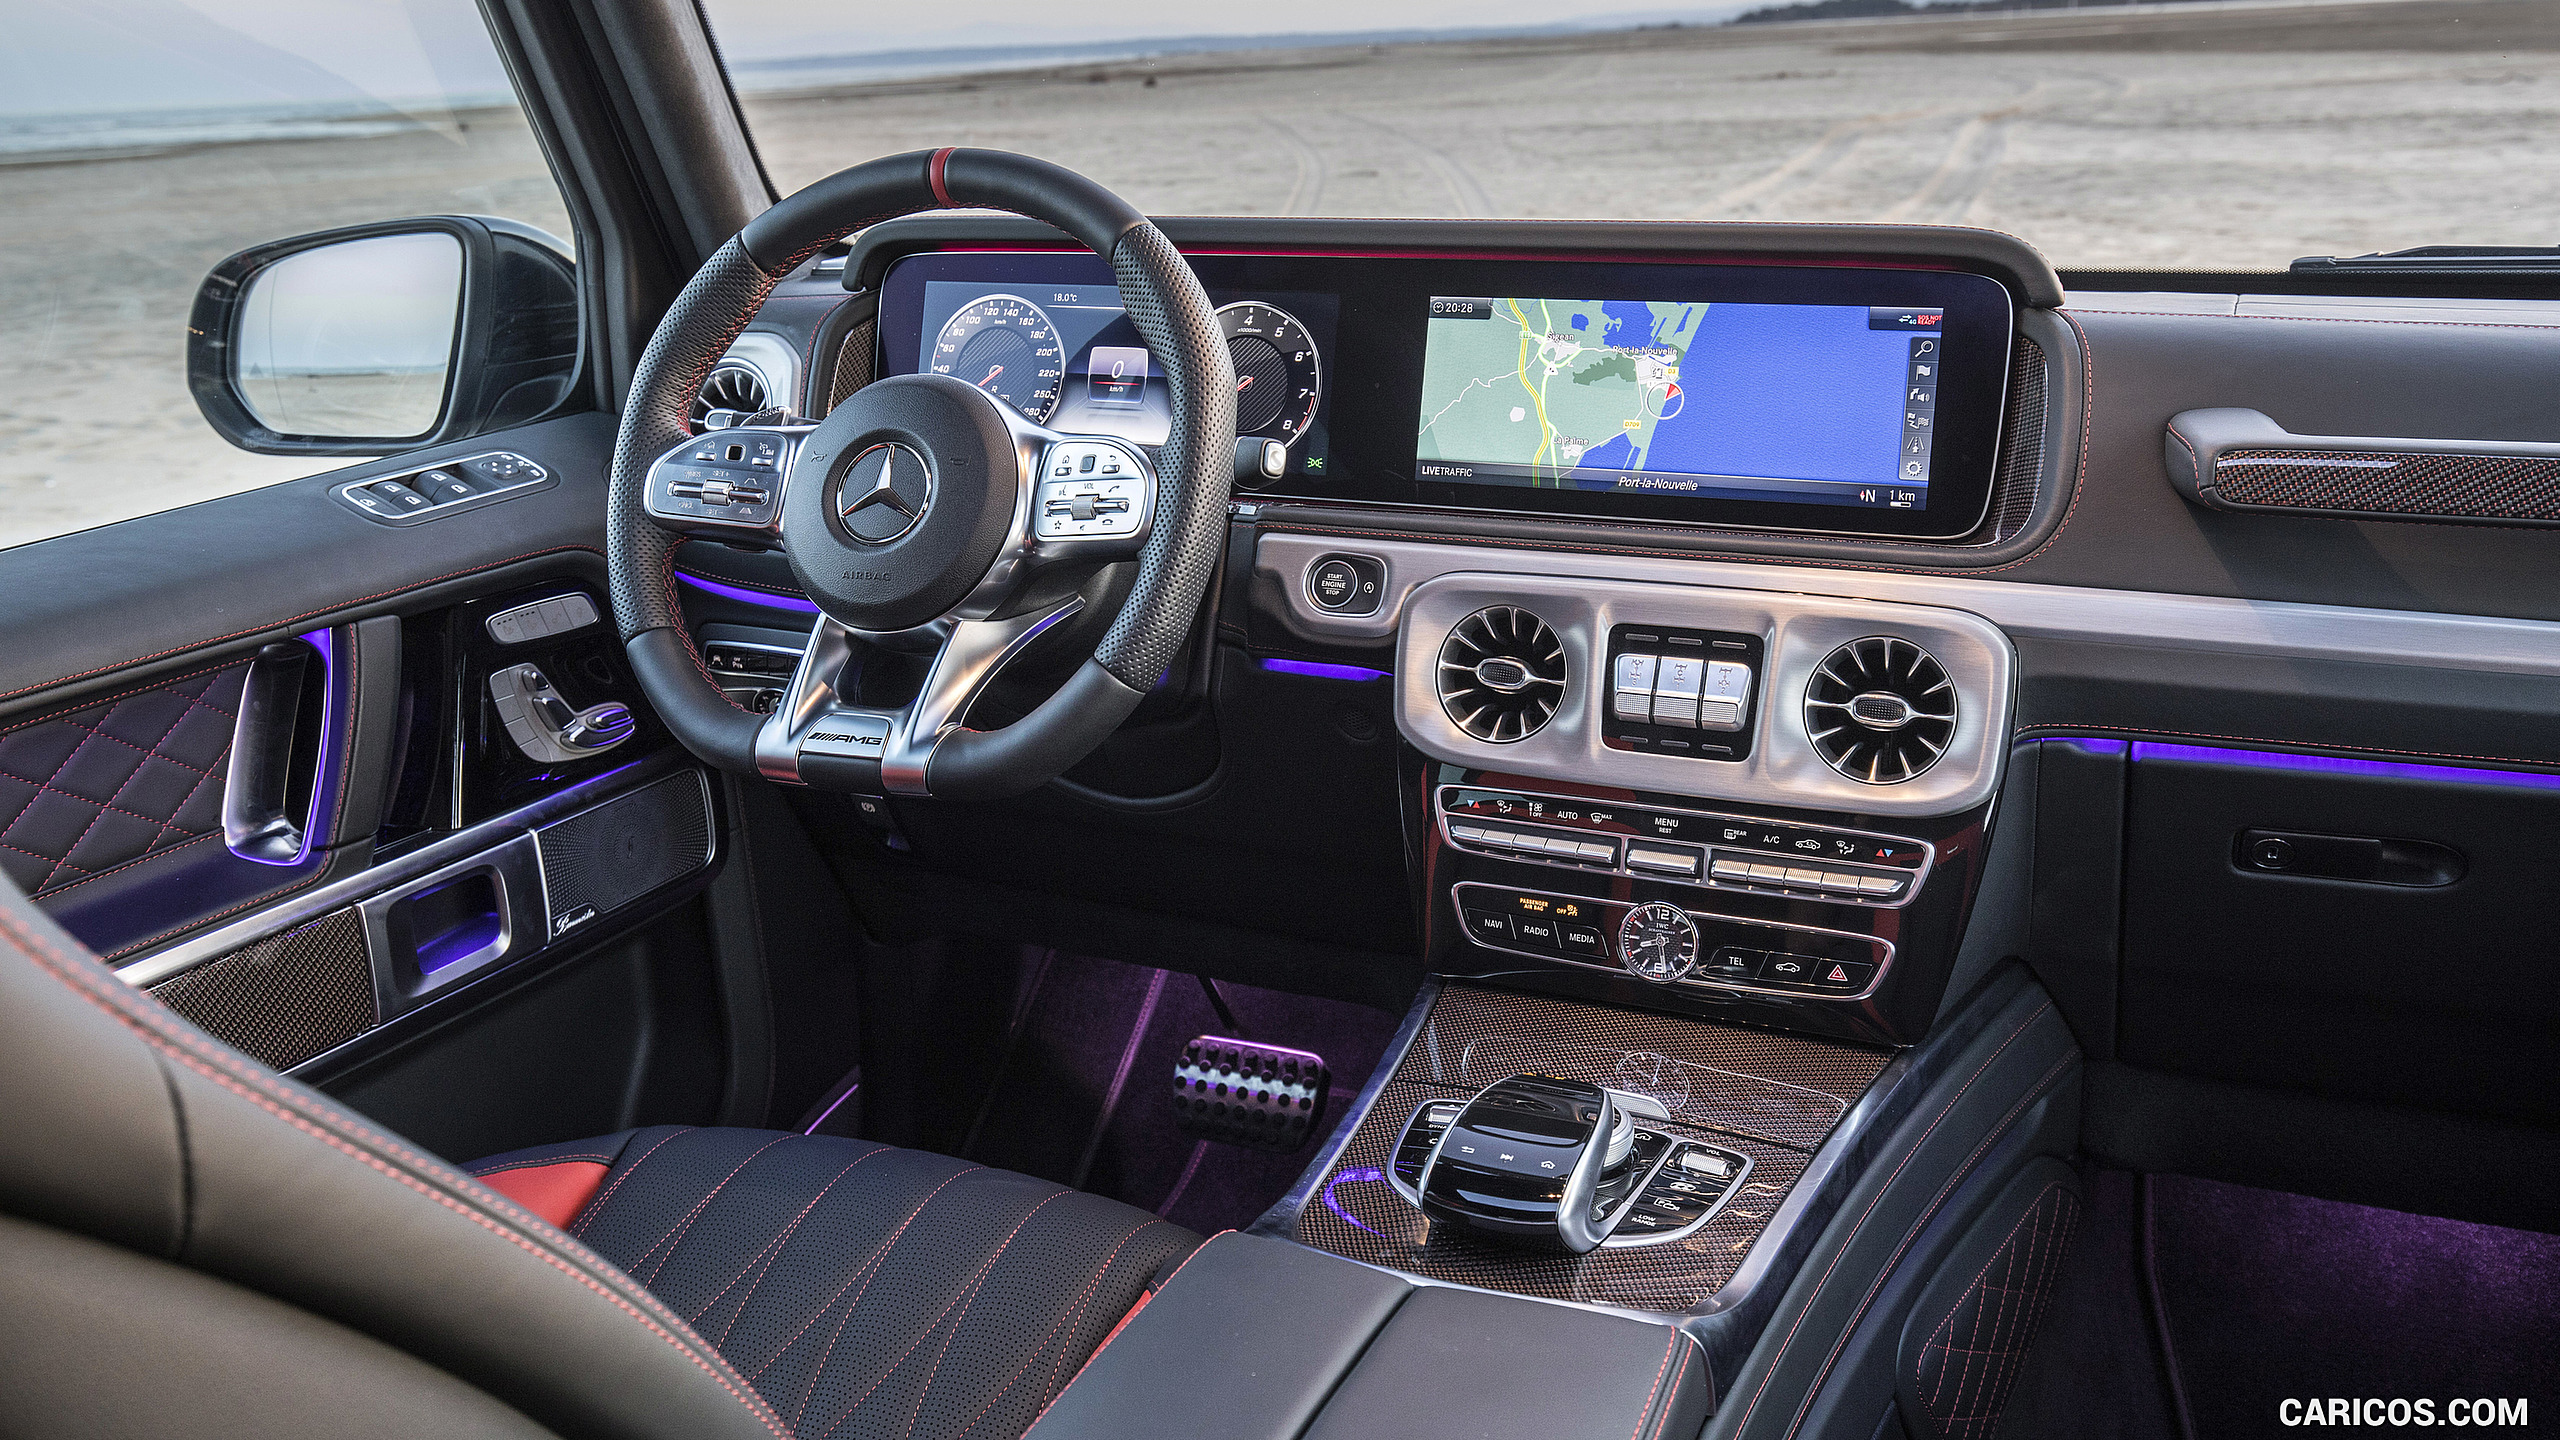 2019 Mercedes-AMG G63 - Interior, #197 of 452